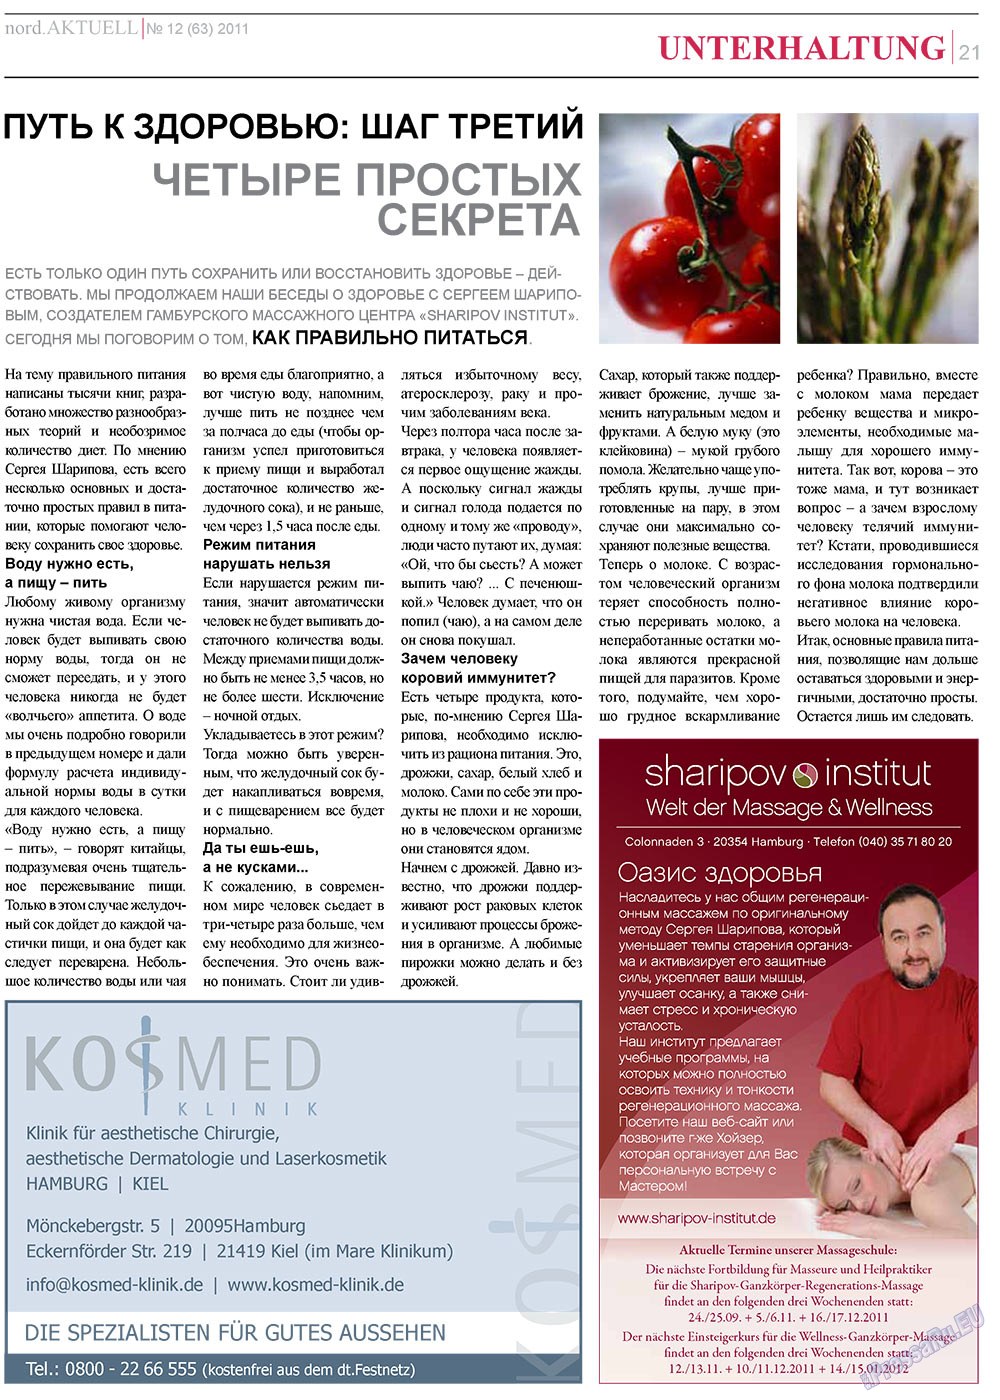 nord.Aktuell, газета. 2011 №12 стр.21